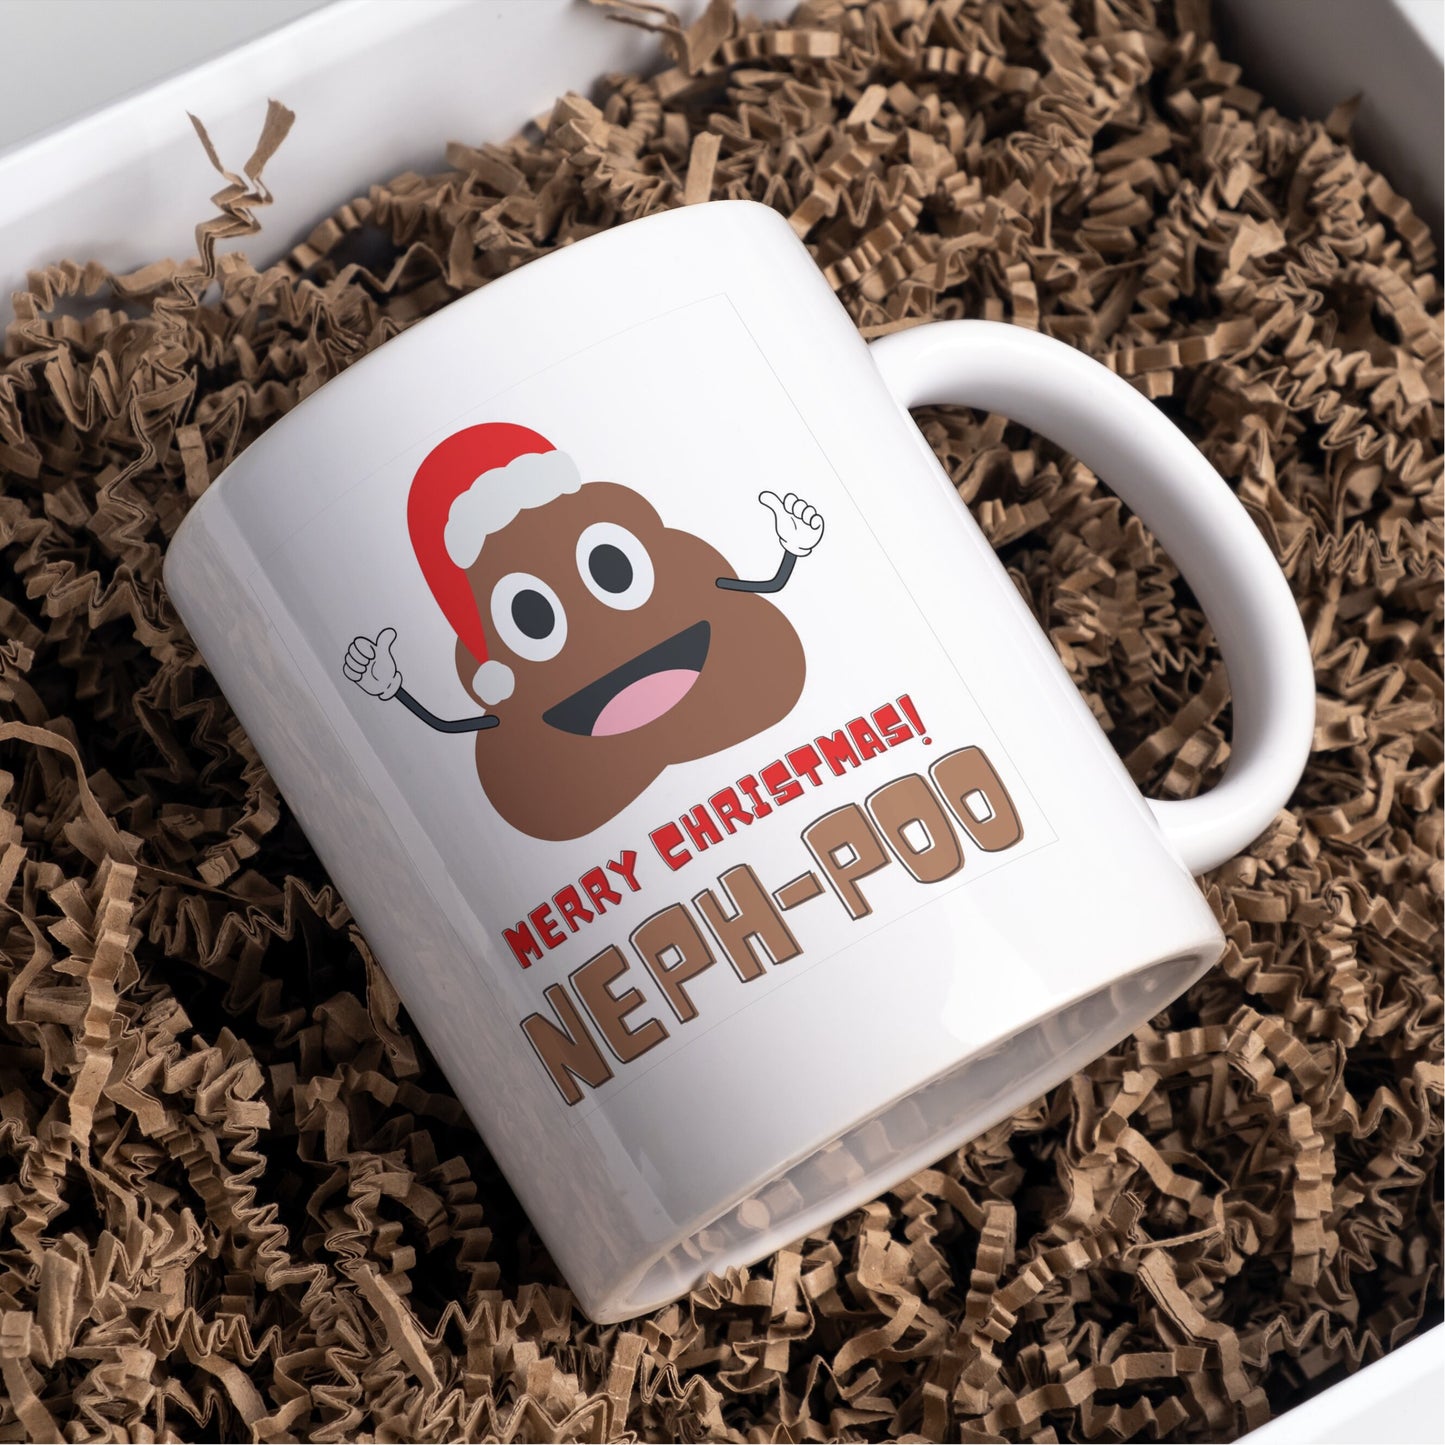 Merry Christmas Nephew or Neph-poo Fun Mug